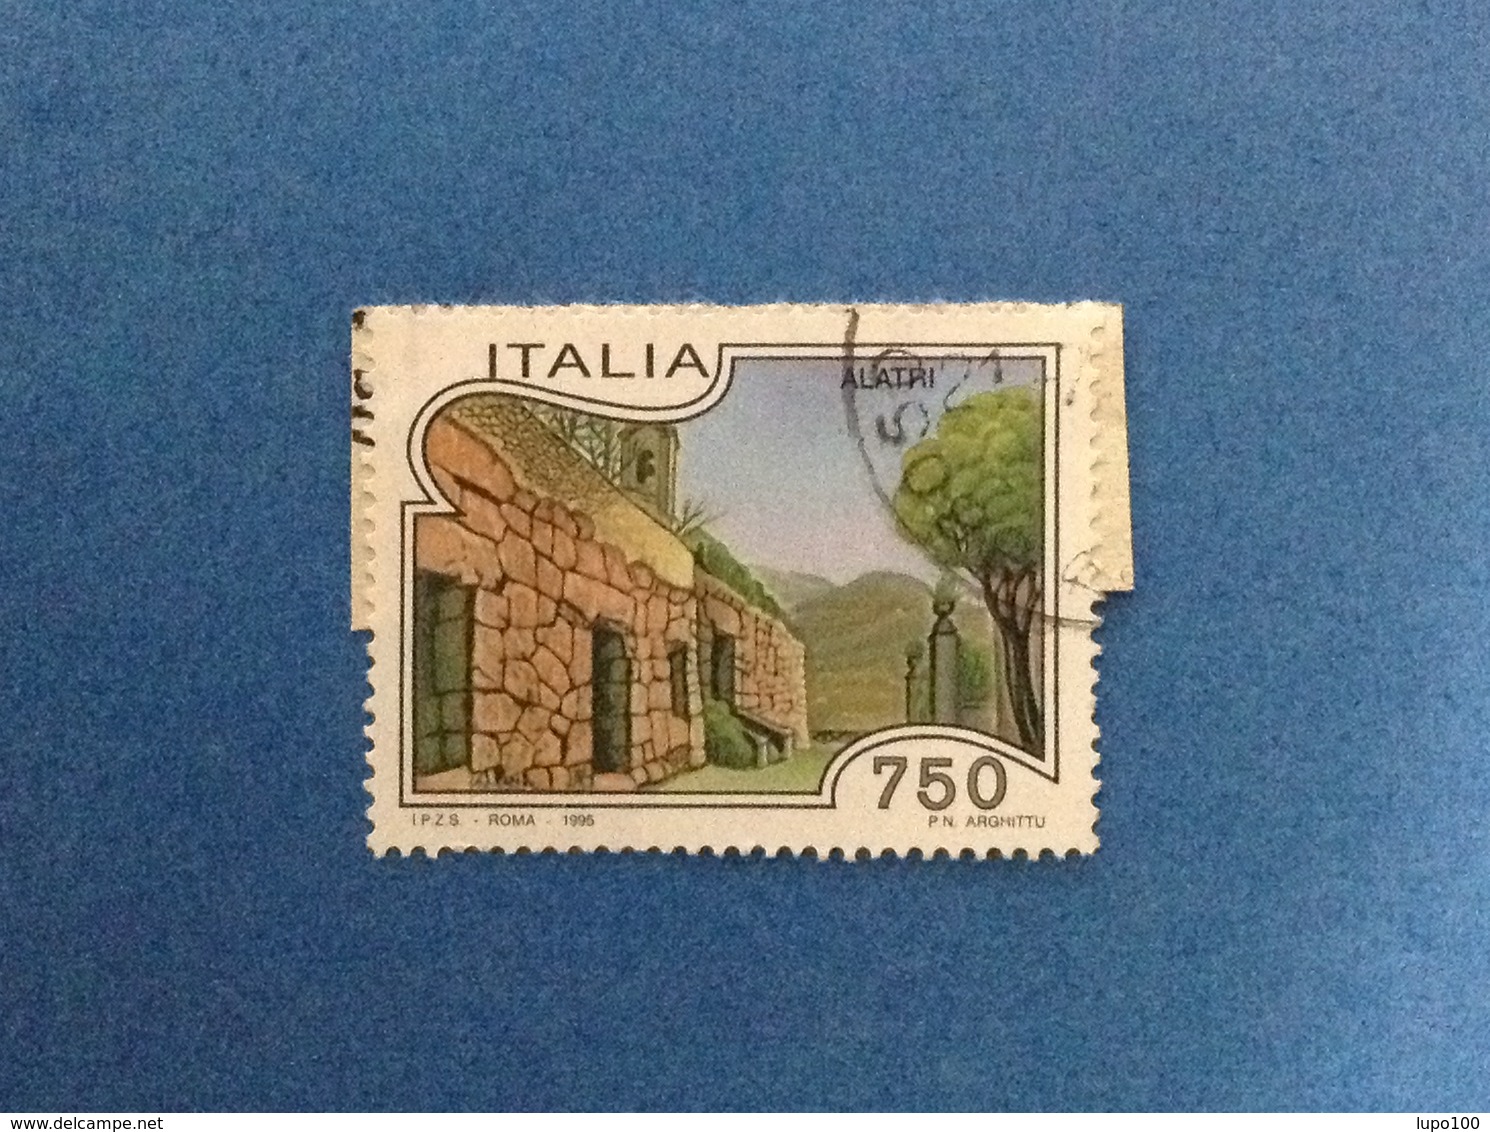 1995 ITALIA FRANCOBOLLO USATO STAMP USED TURISTICA ALATRI - 1991-00: Used